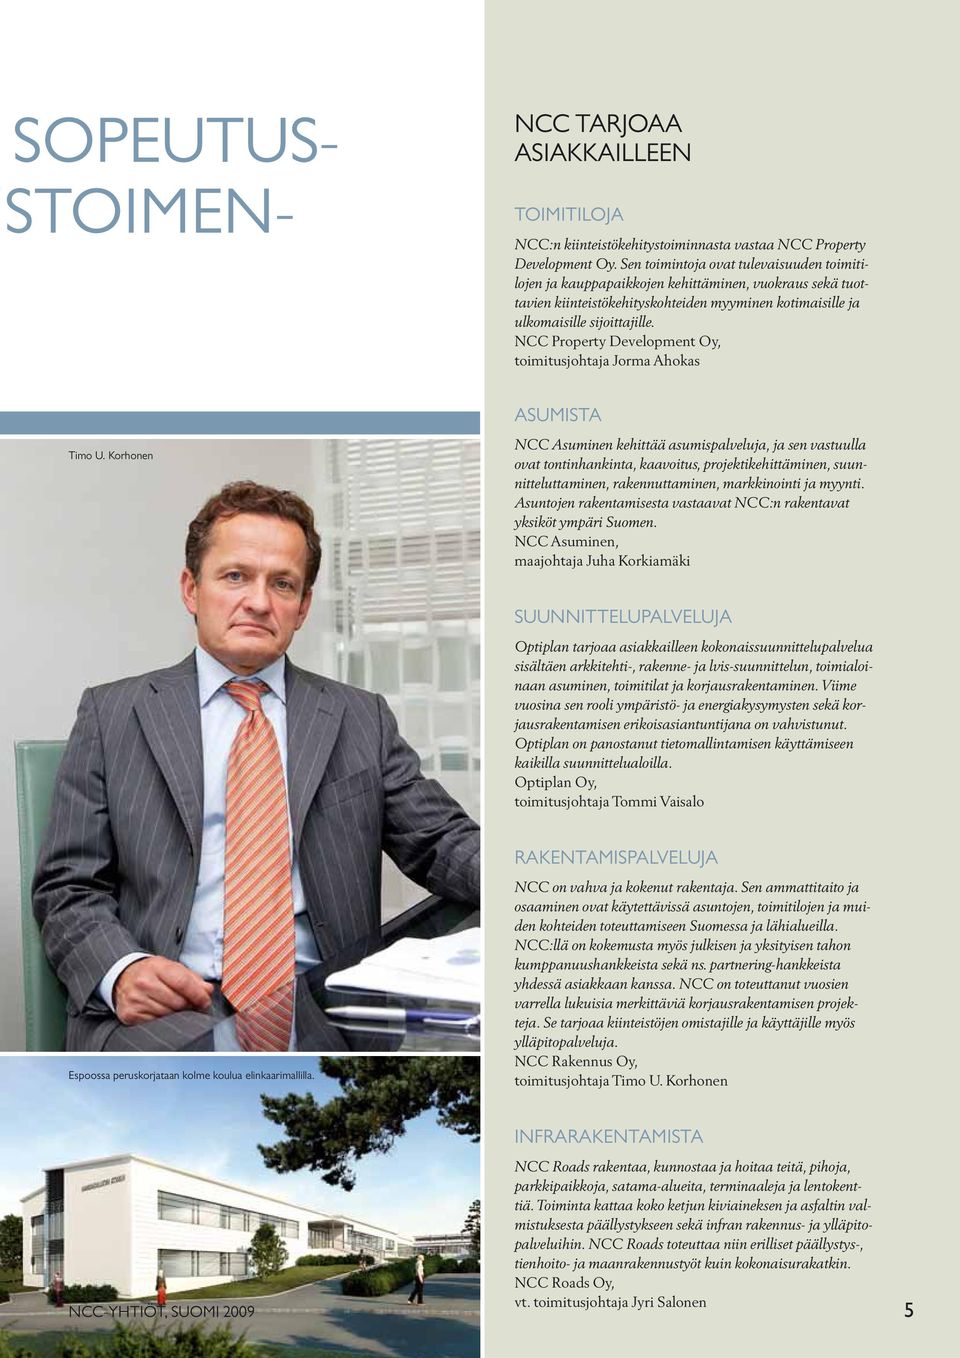 Property Development Oy, toimitusjohtaja Jorma Ahokas Timo U.